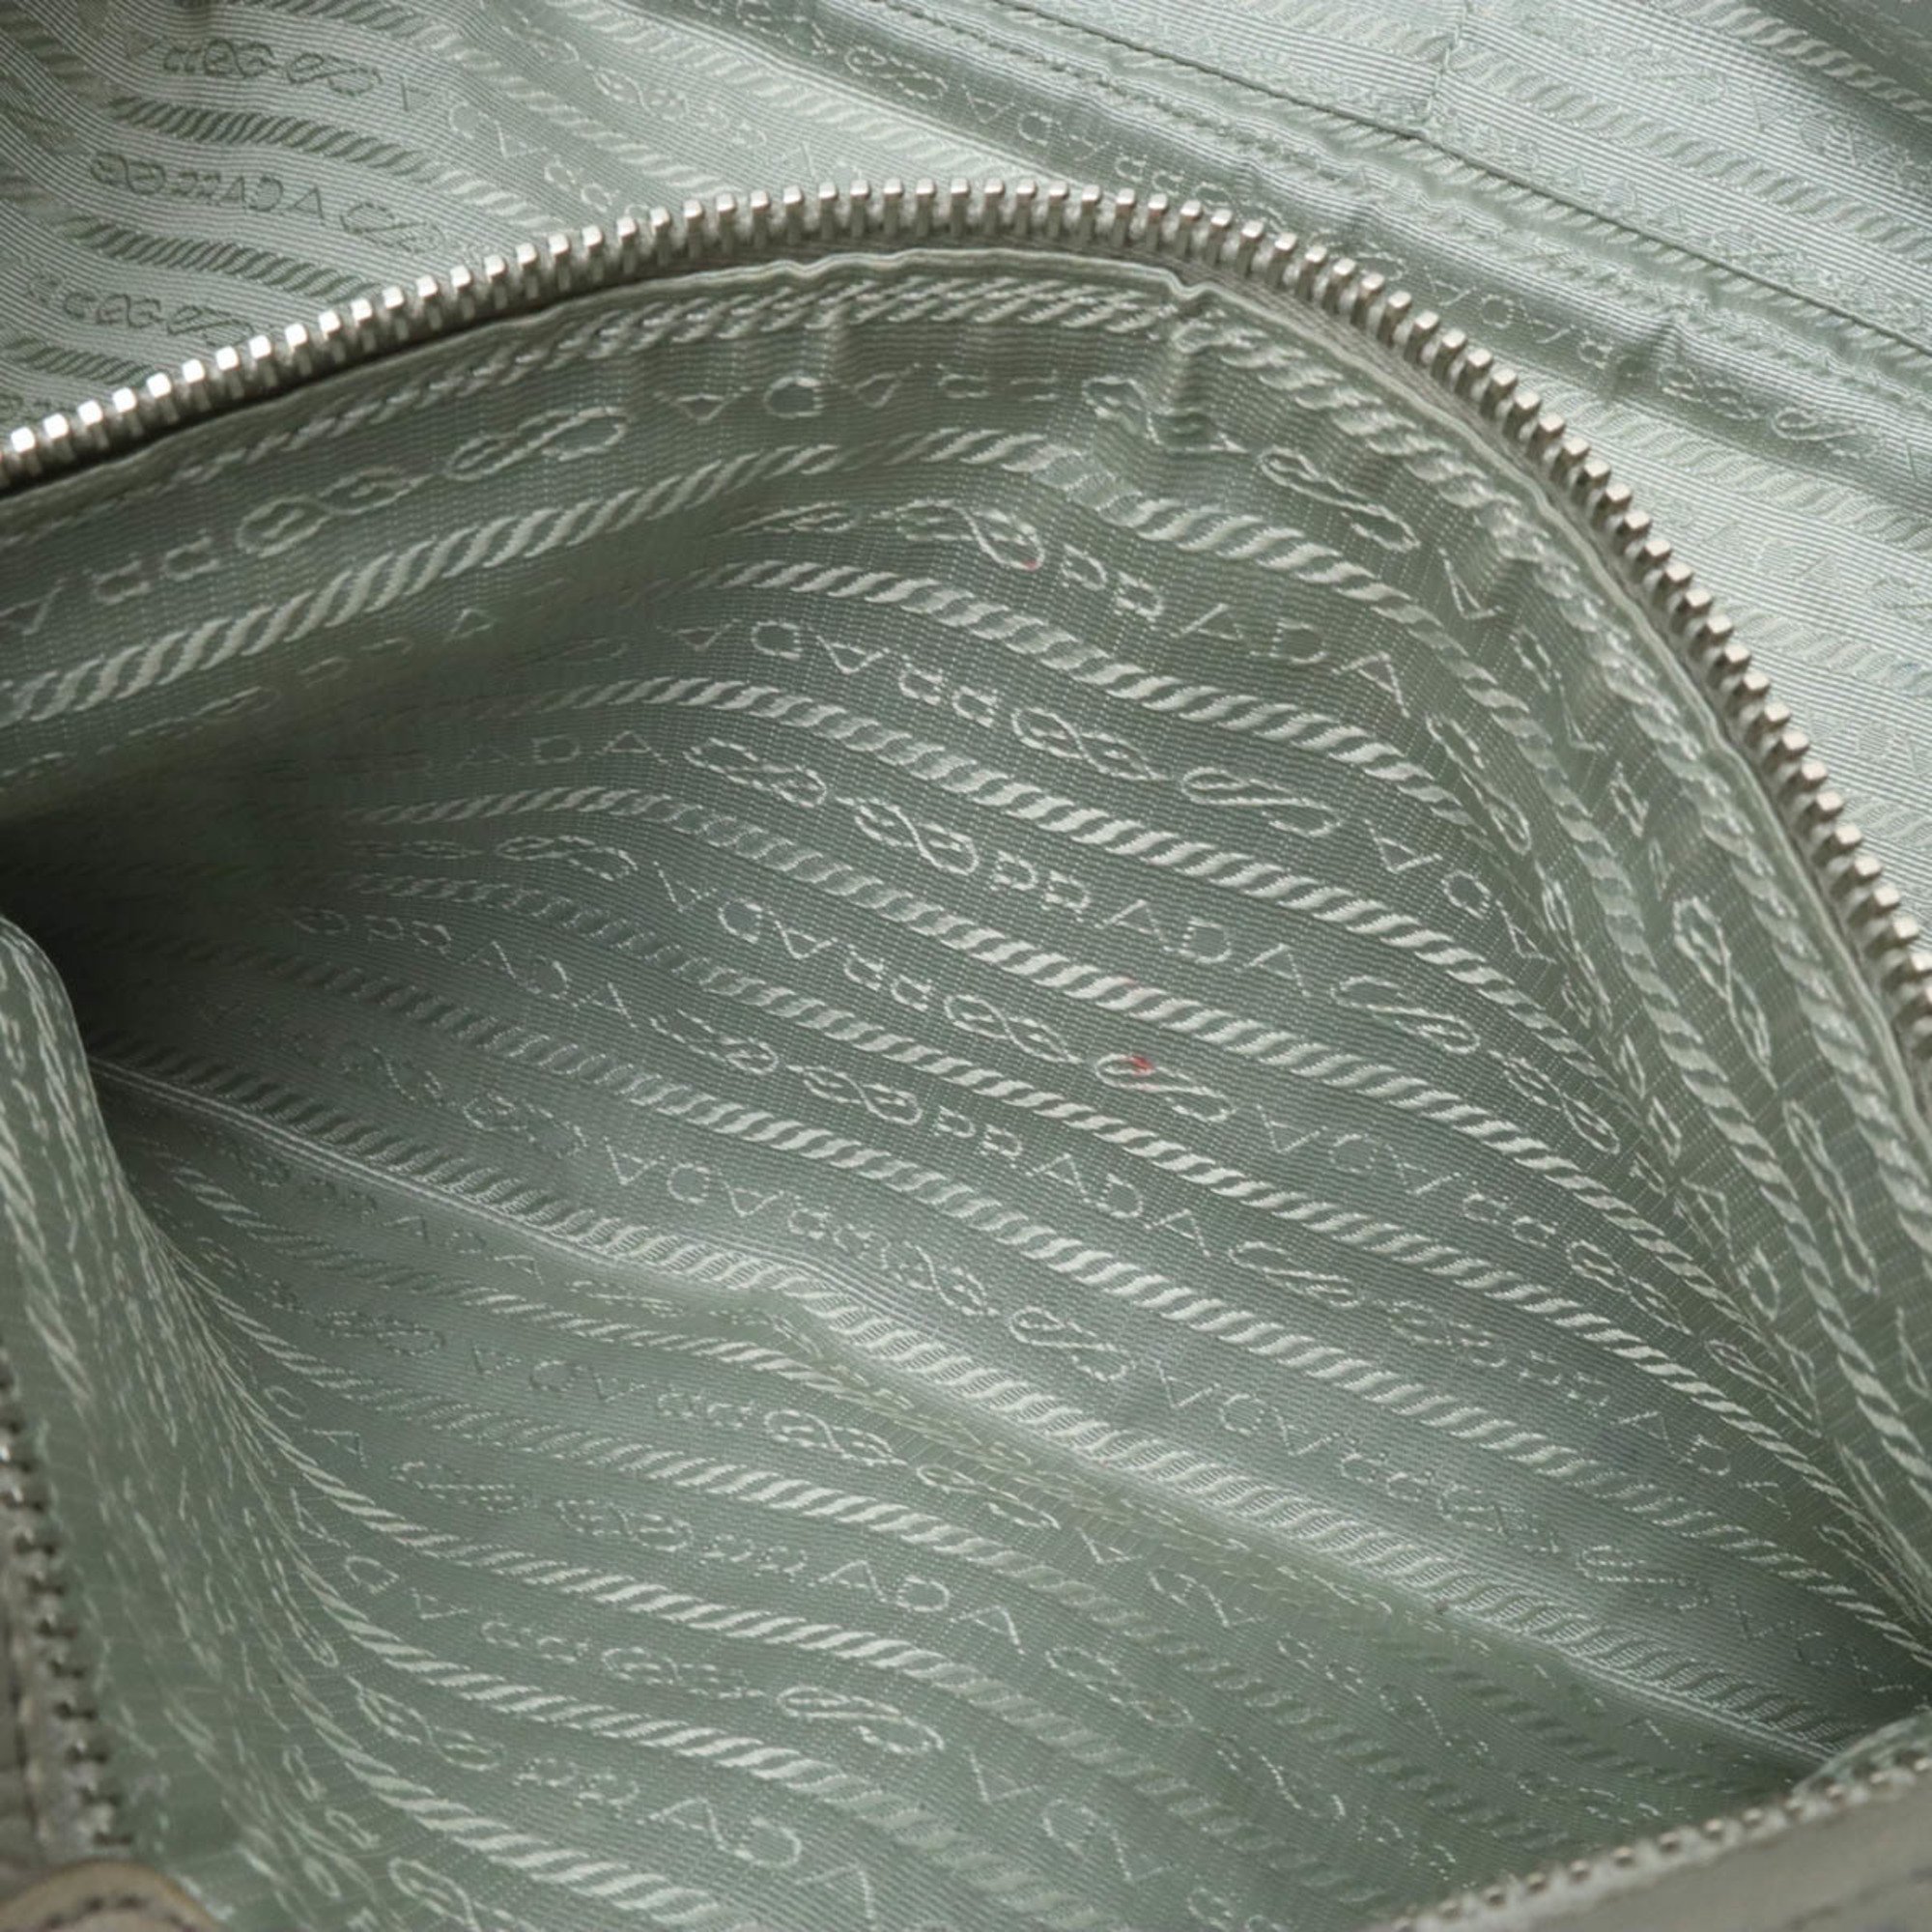 PRADA Prada Bow Handbag Tote Bag Leather Grey BN2234